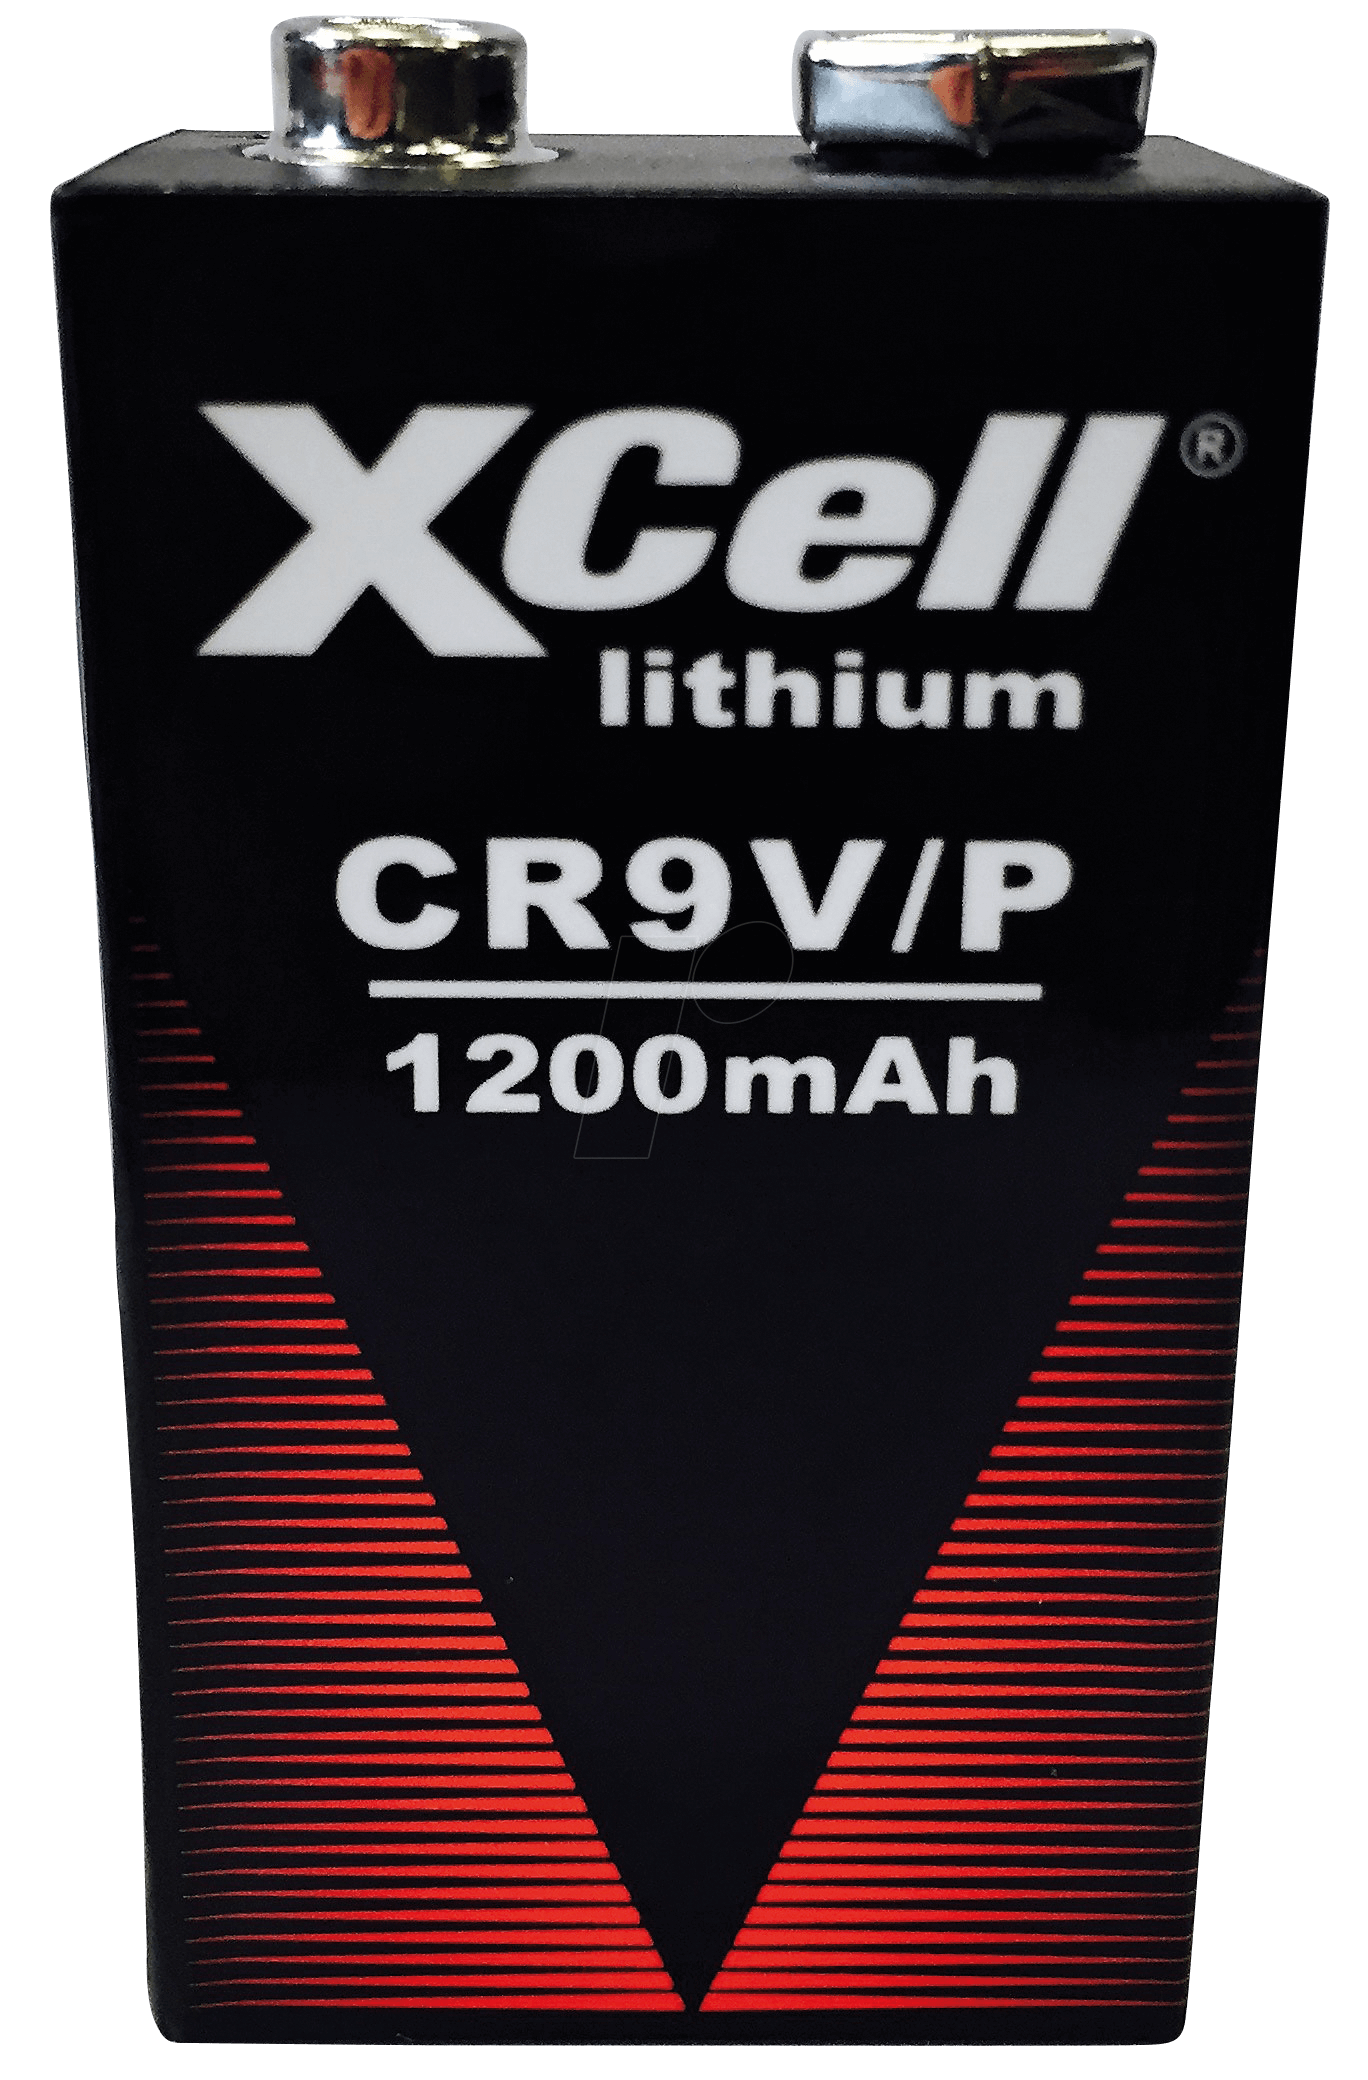 decaan stijfheid premier LITHIUM 9V XCELL: XCELL lithium-cel, 9 Volt-blok, 1200mAh bei reichelt  elektronik